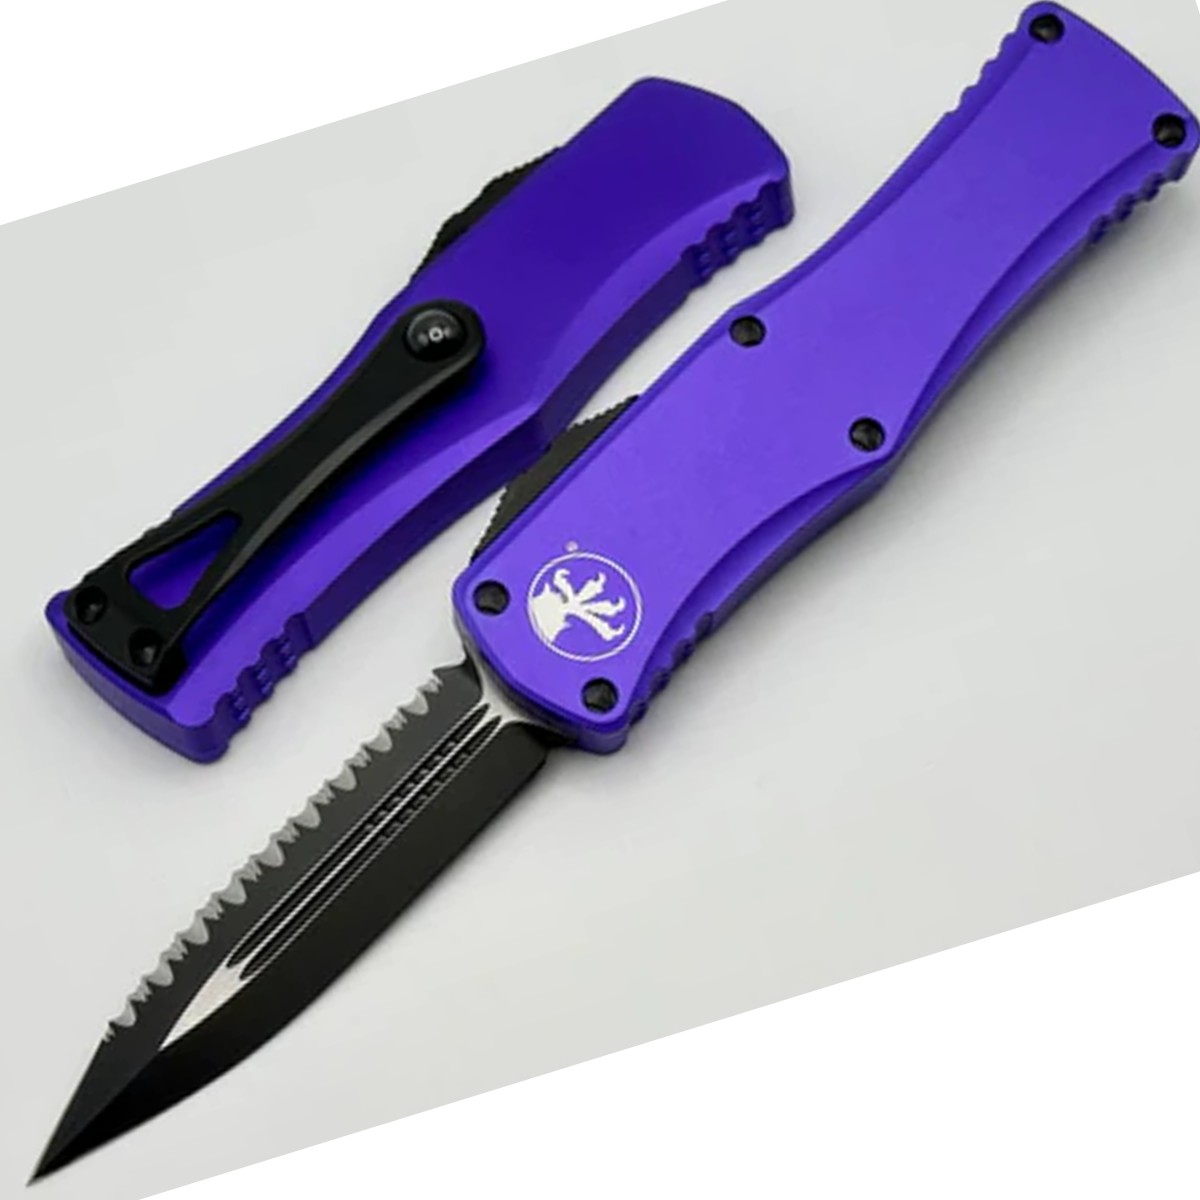 Microtech-Hera-Serrated-Purple-702-3PU